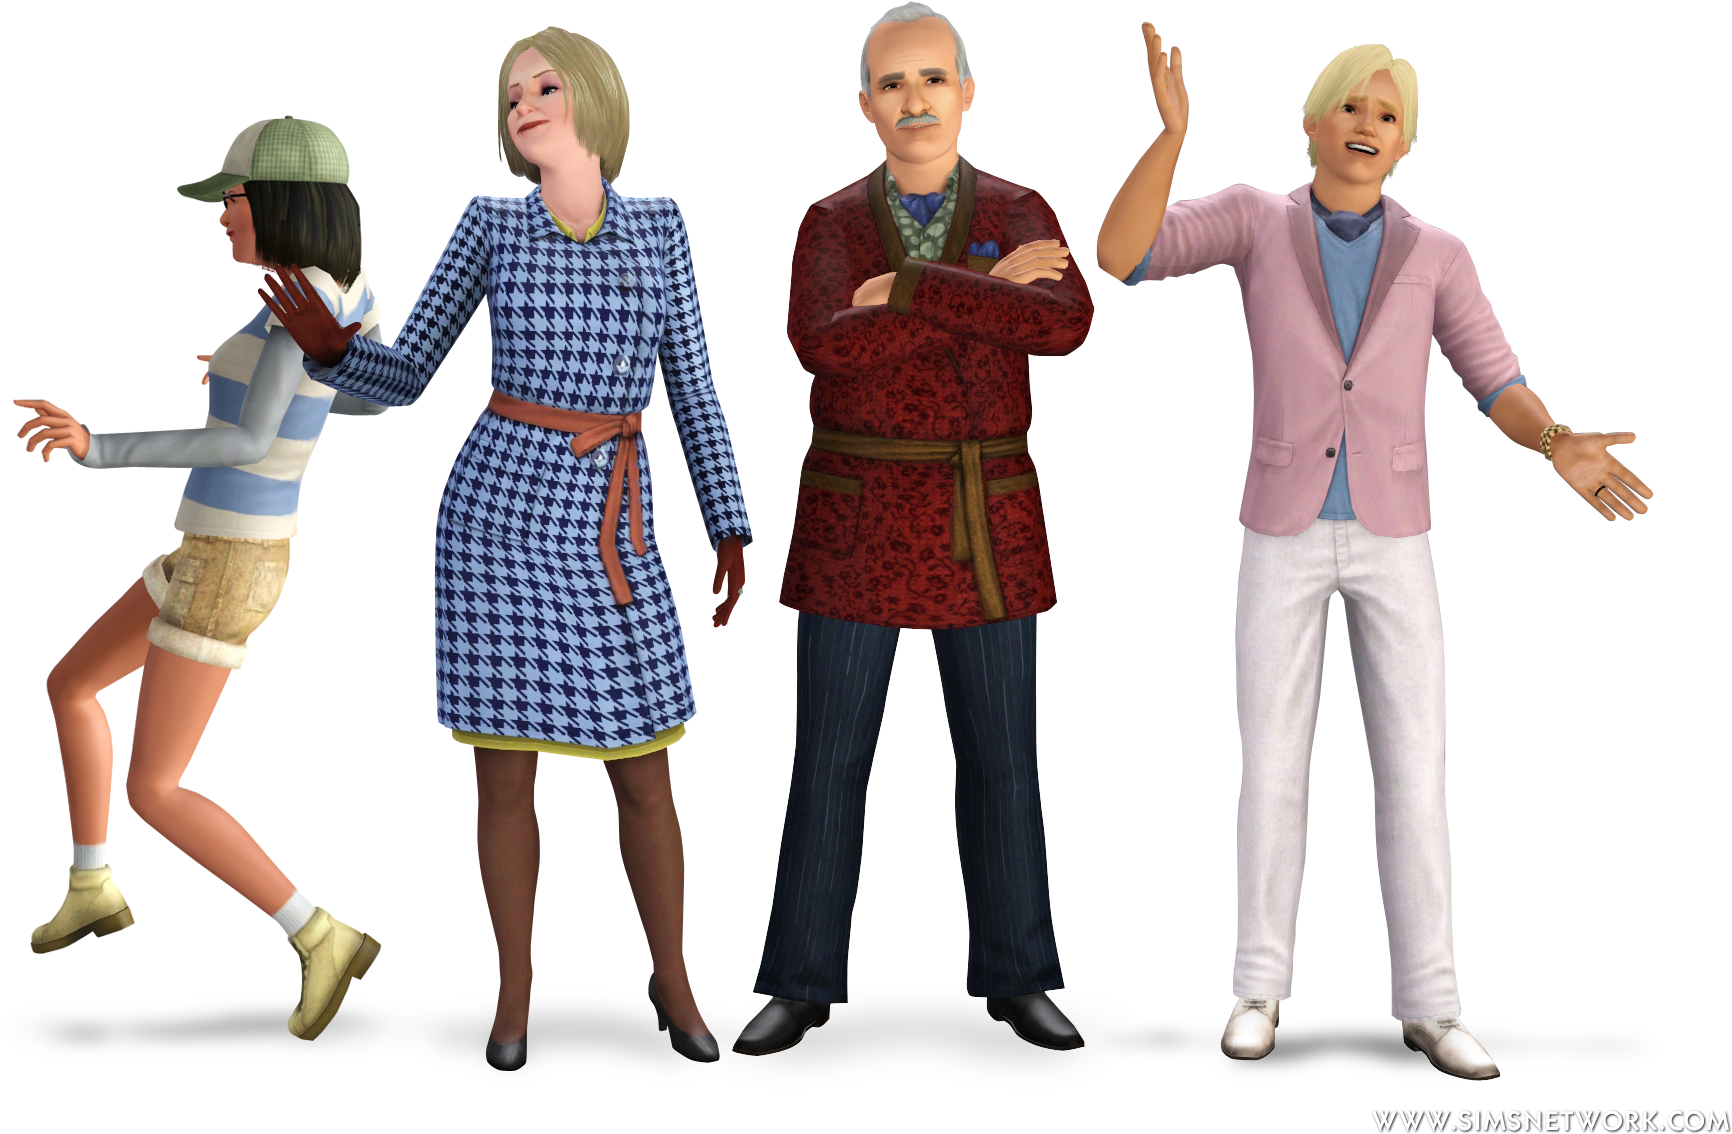 The Sims 3 Hidden Springs - Family On Sims 3 (1858x1210)